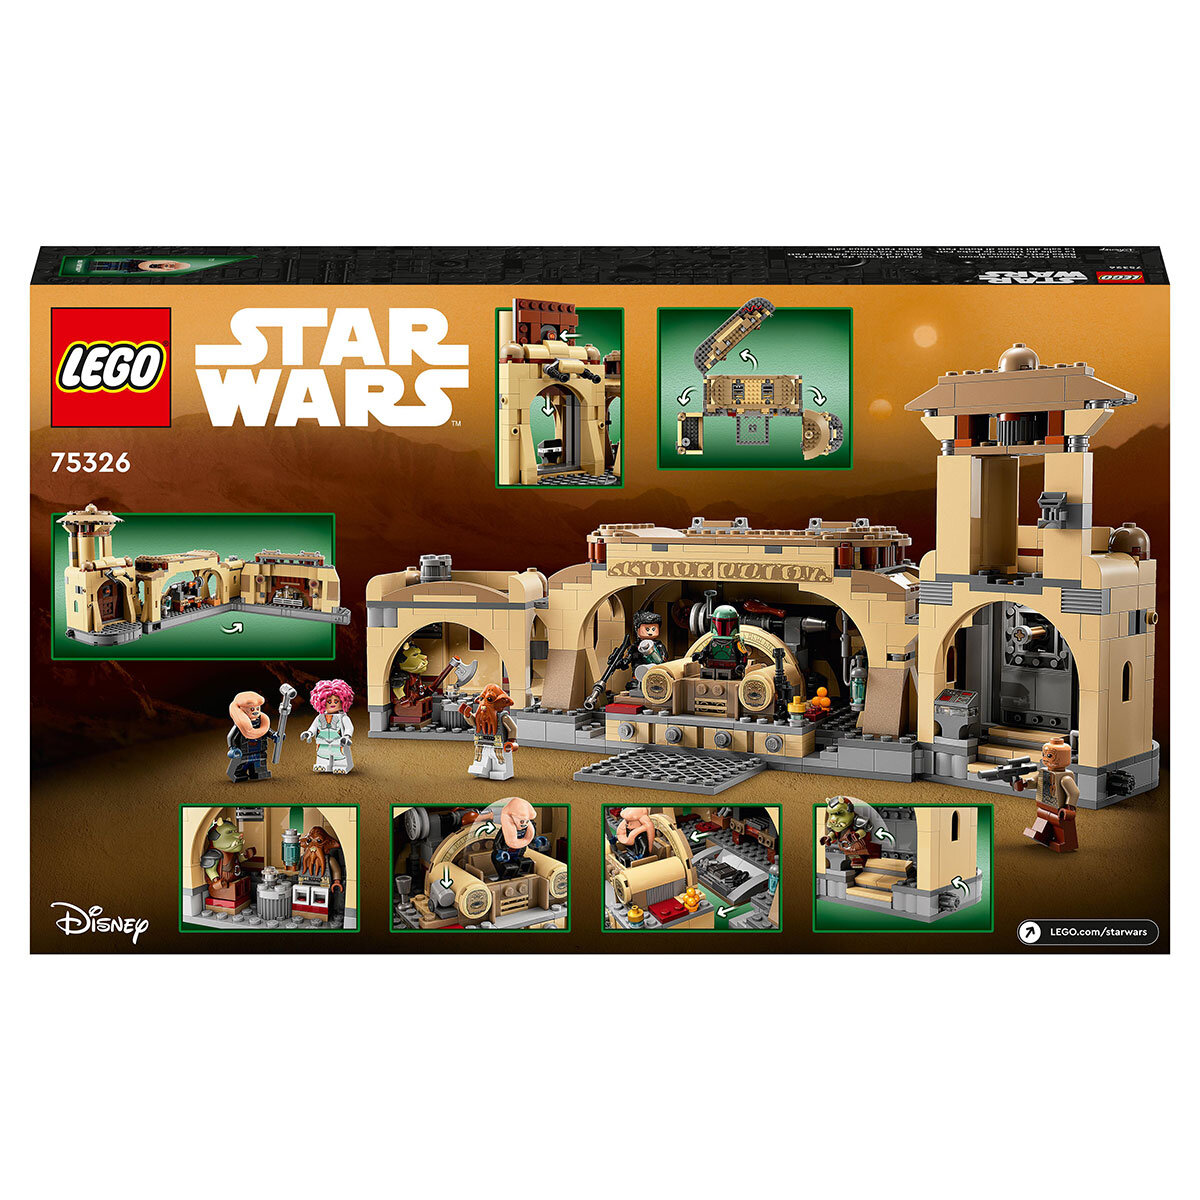 Buy LEGO Star Wars Boba Fett's Throne Room Back of Box Image at Costco.co.uk